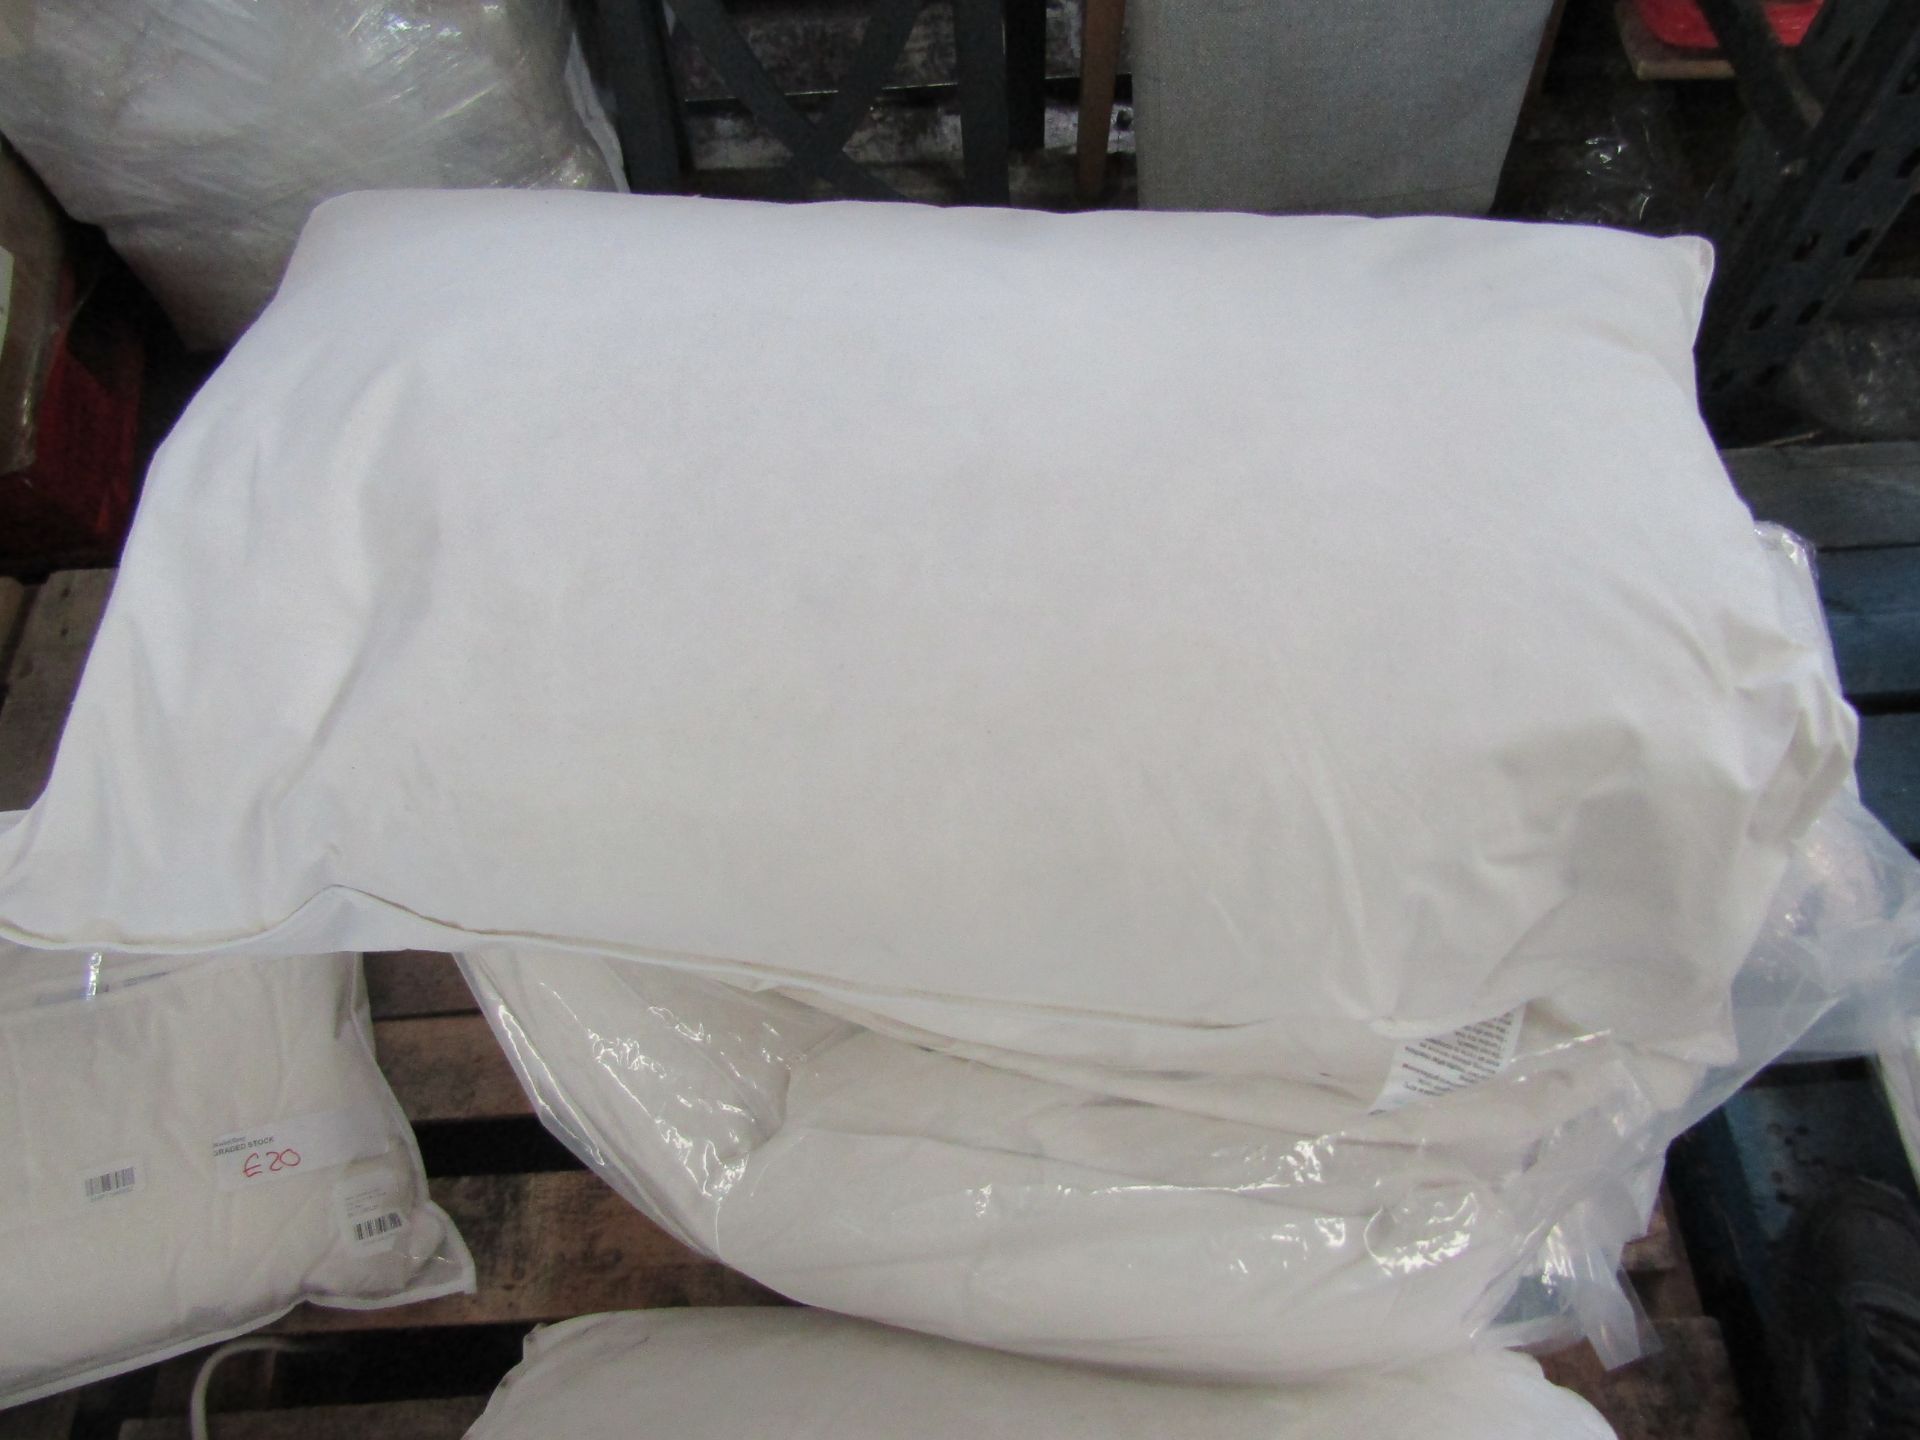 Soak & Sleep Soak & Sleep Goose Feather & Down Pillow Standard Pillows - 4 Pack - Medium RRP 85 - Image 2 of 2